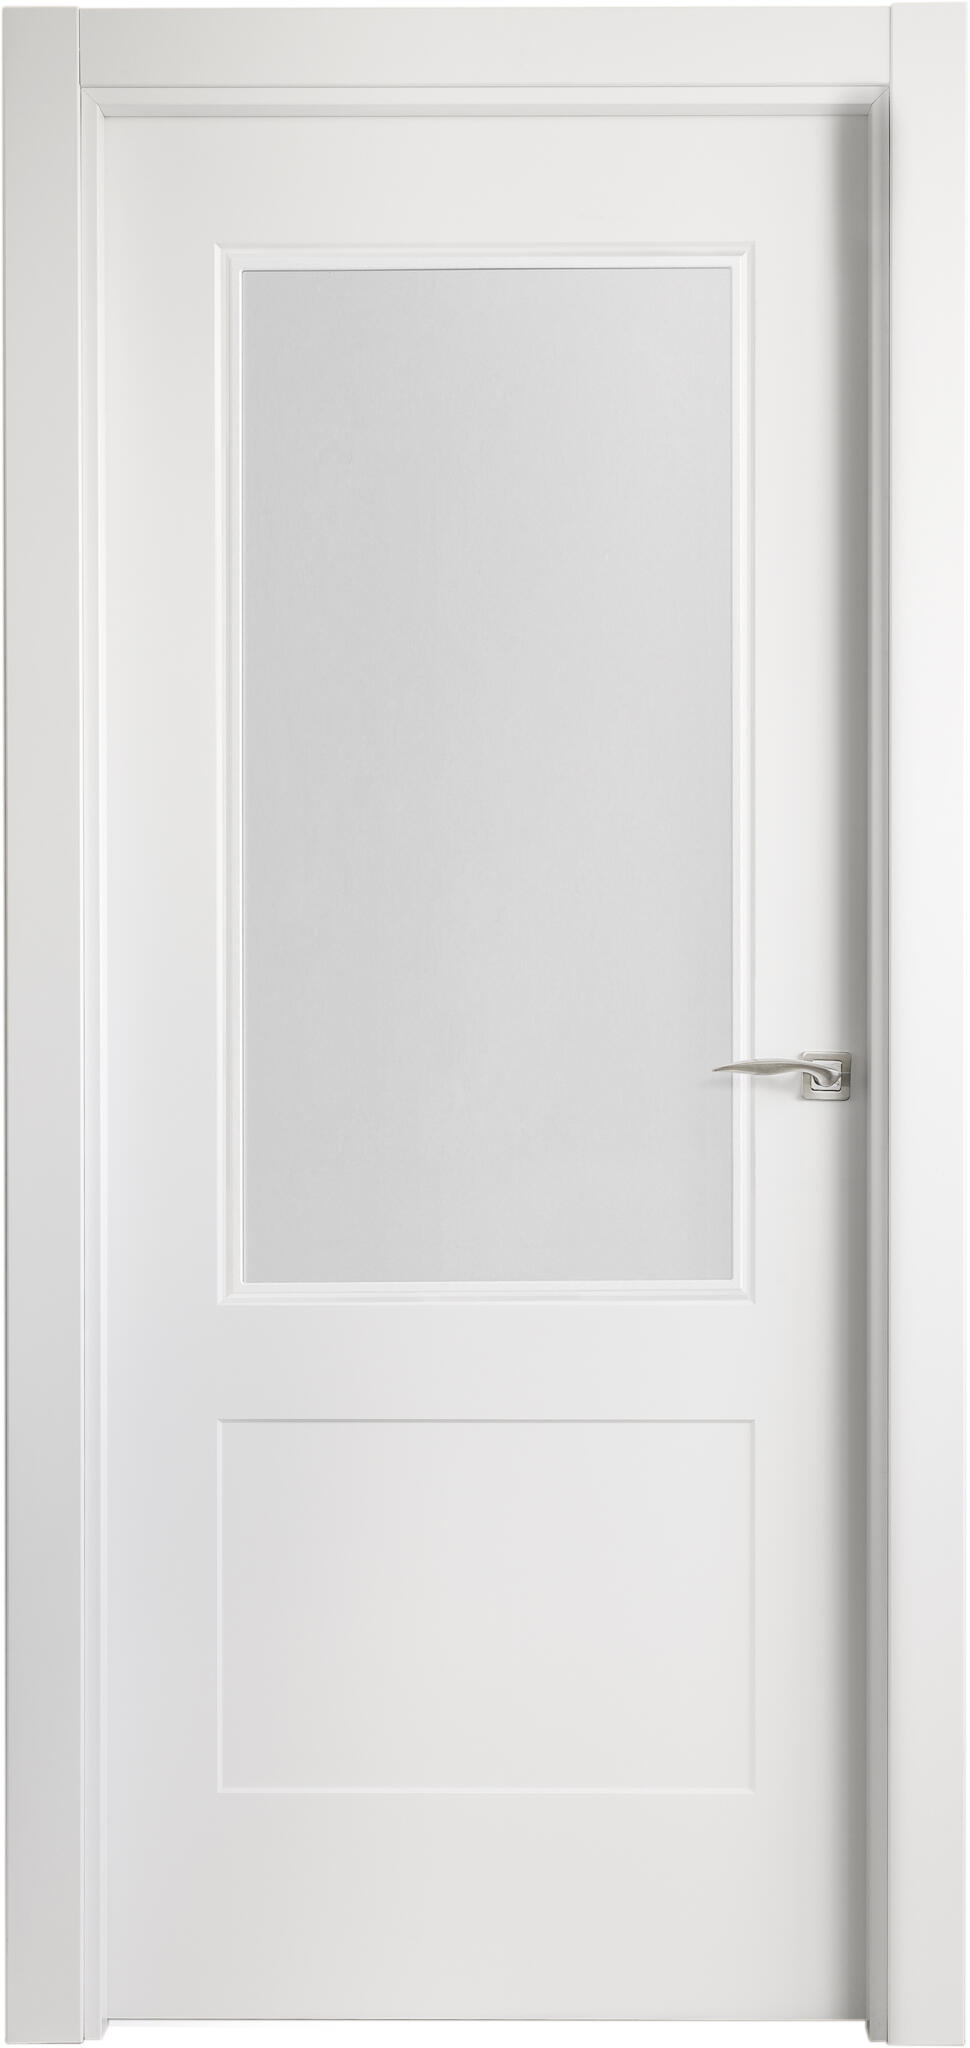 Puerta atlanta plus blanco apertura izquierda con cristal 11x72,5cm